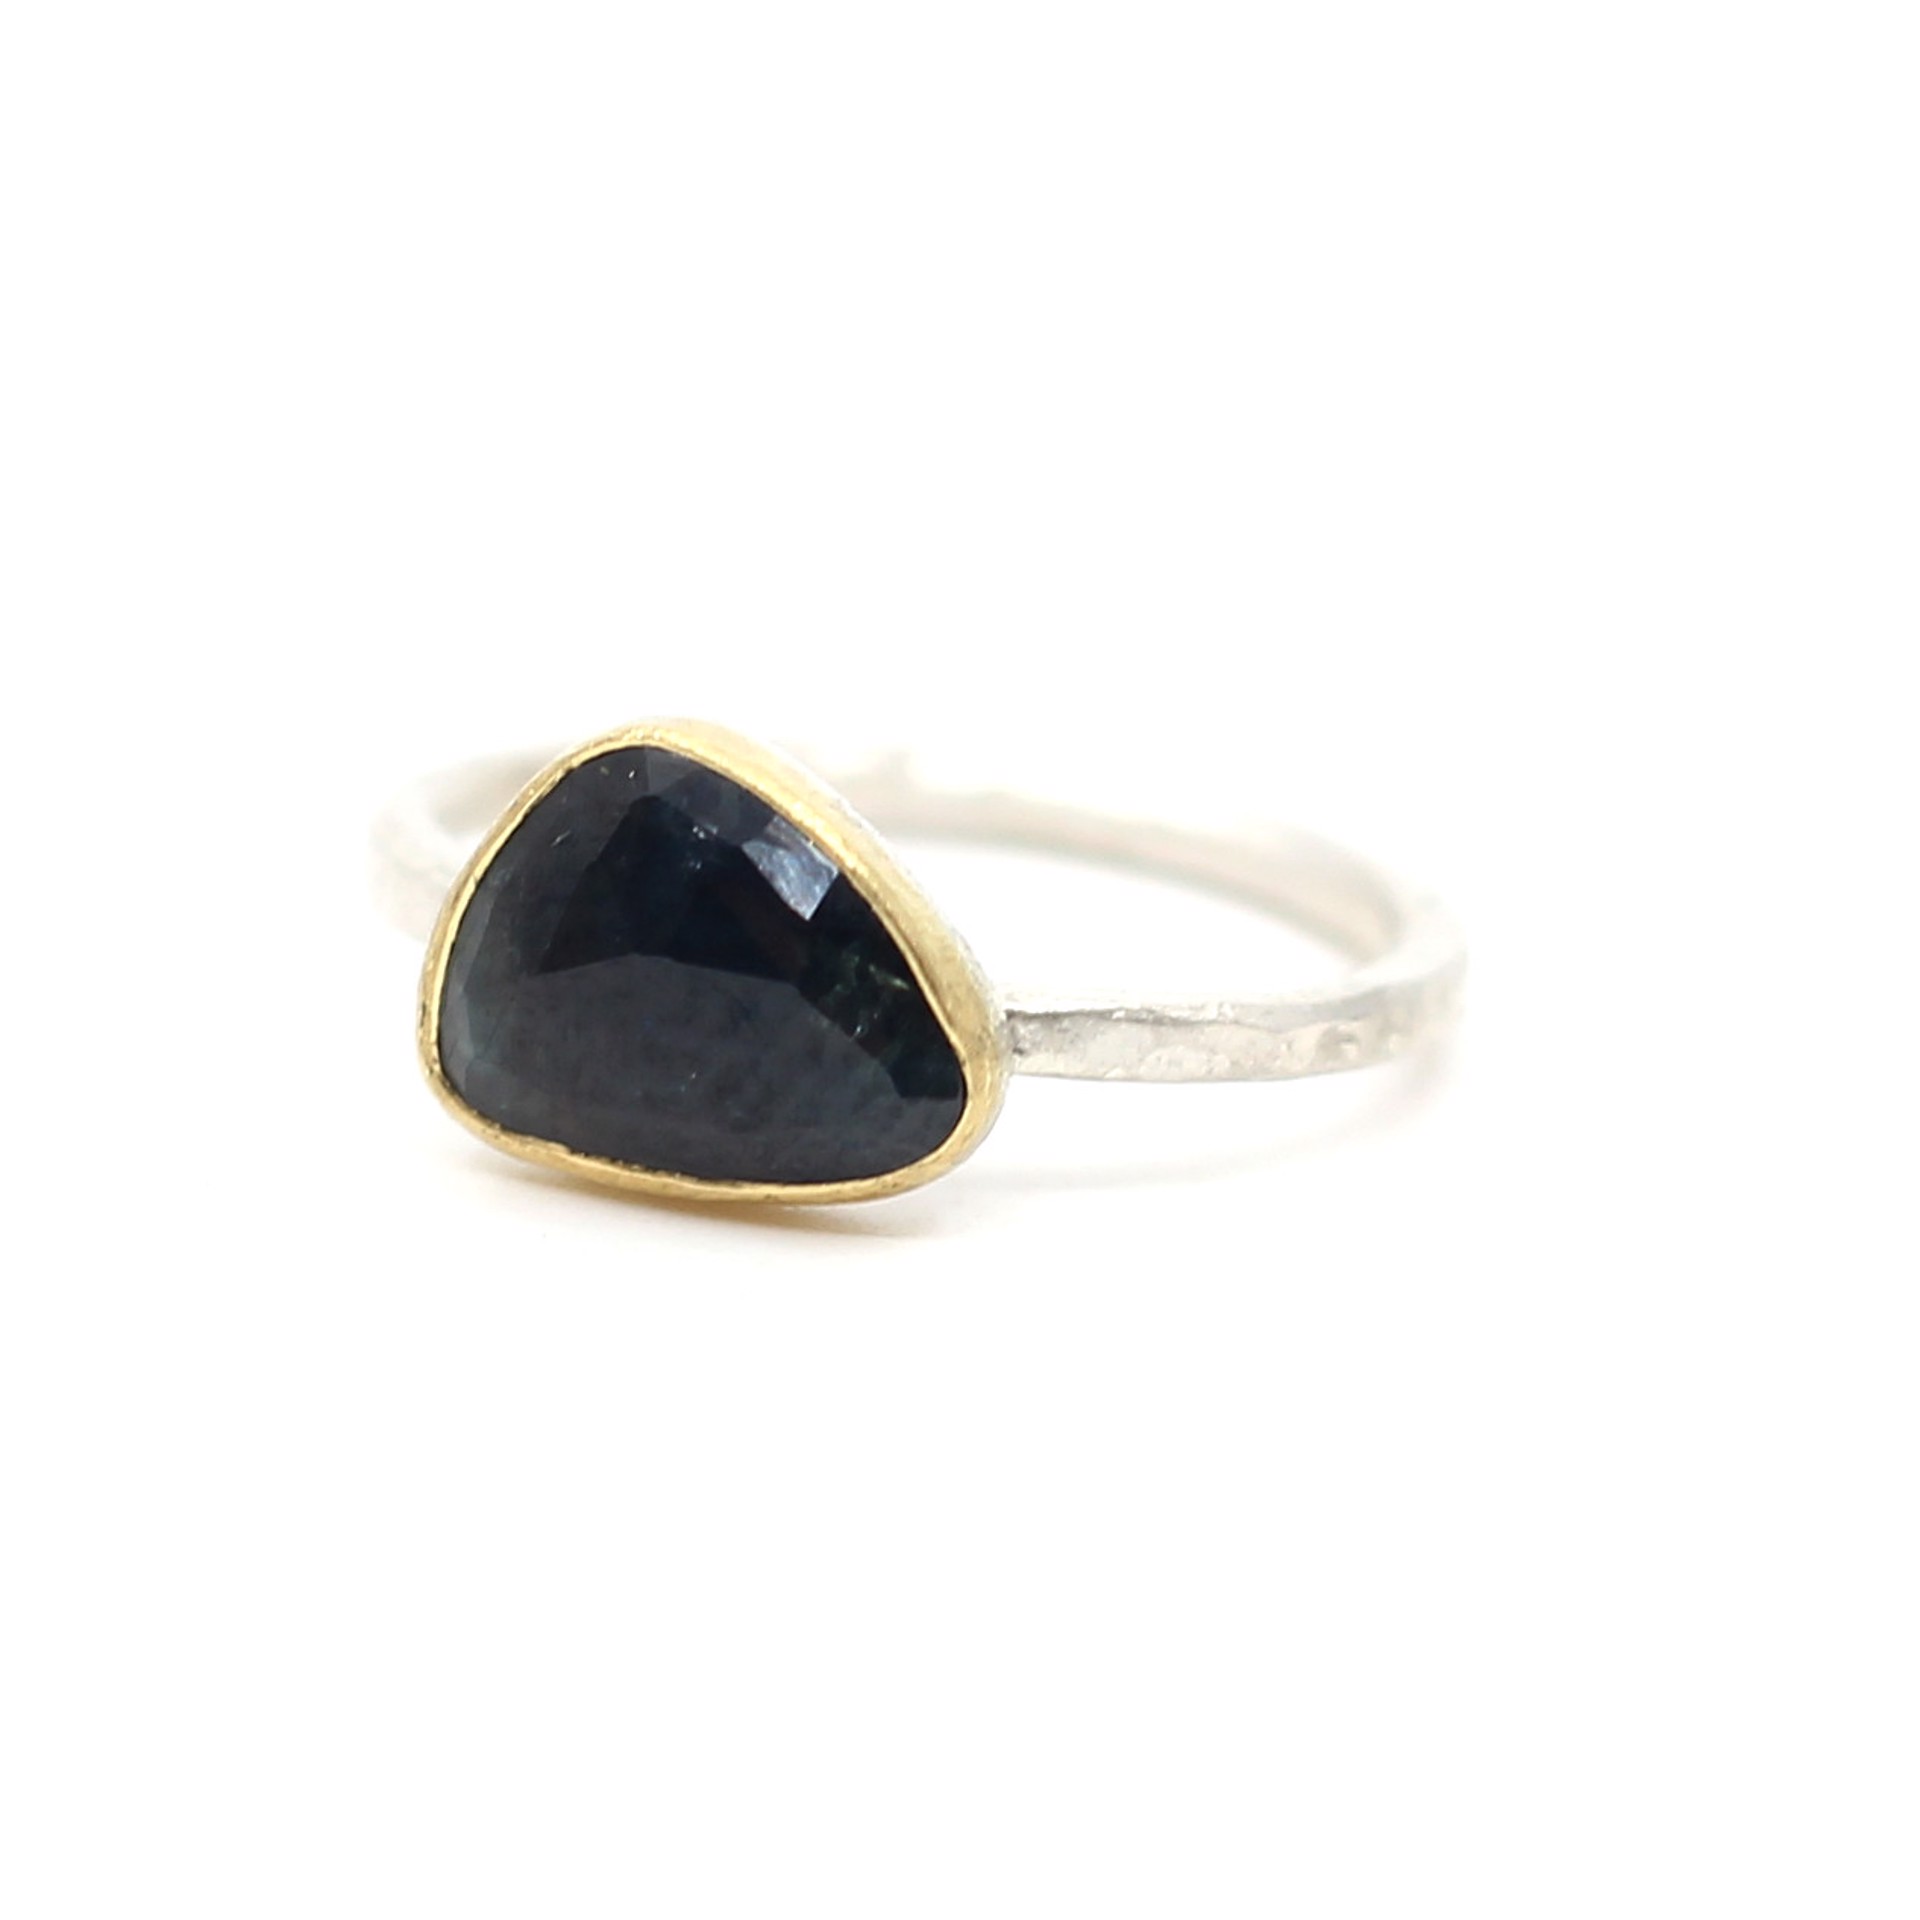 Dark Teal Sapphire Ring by Leia Zumbro